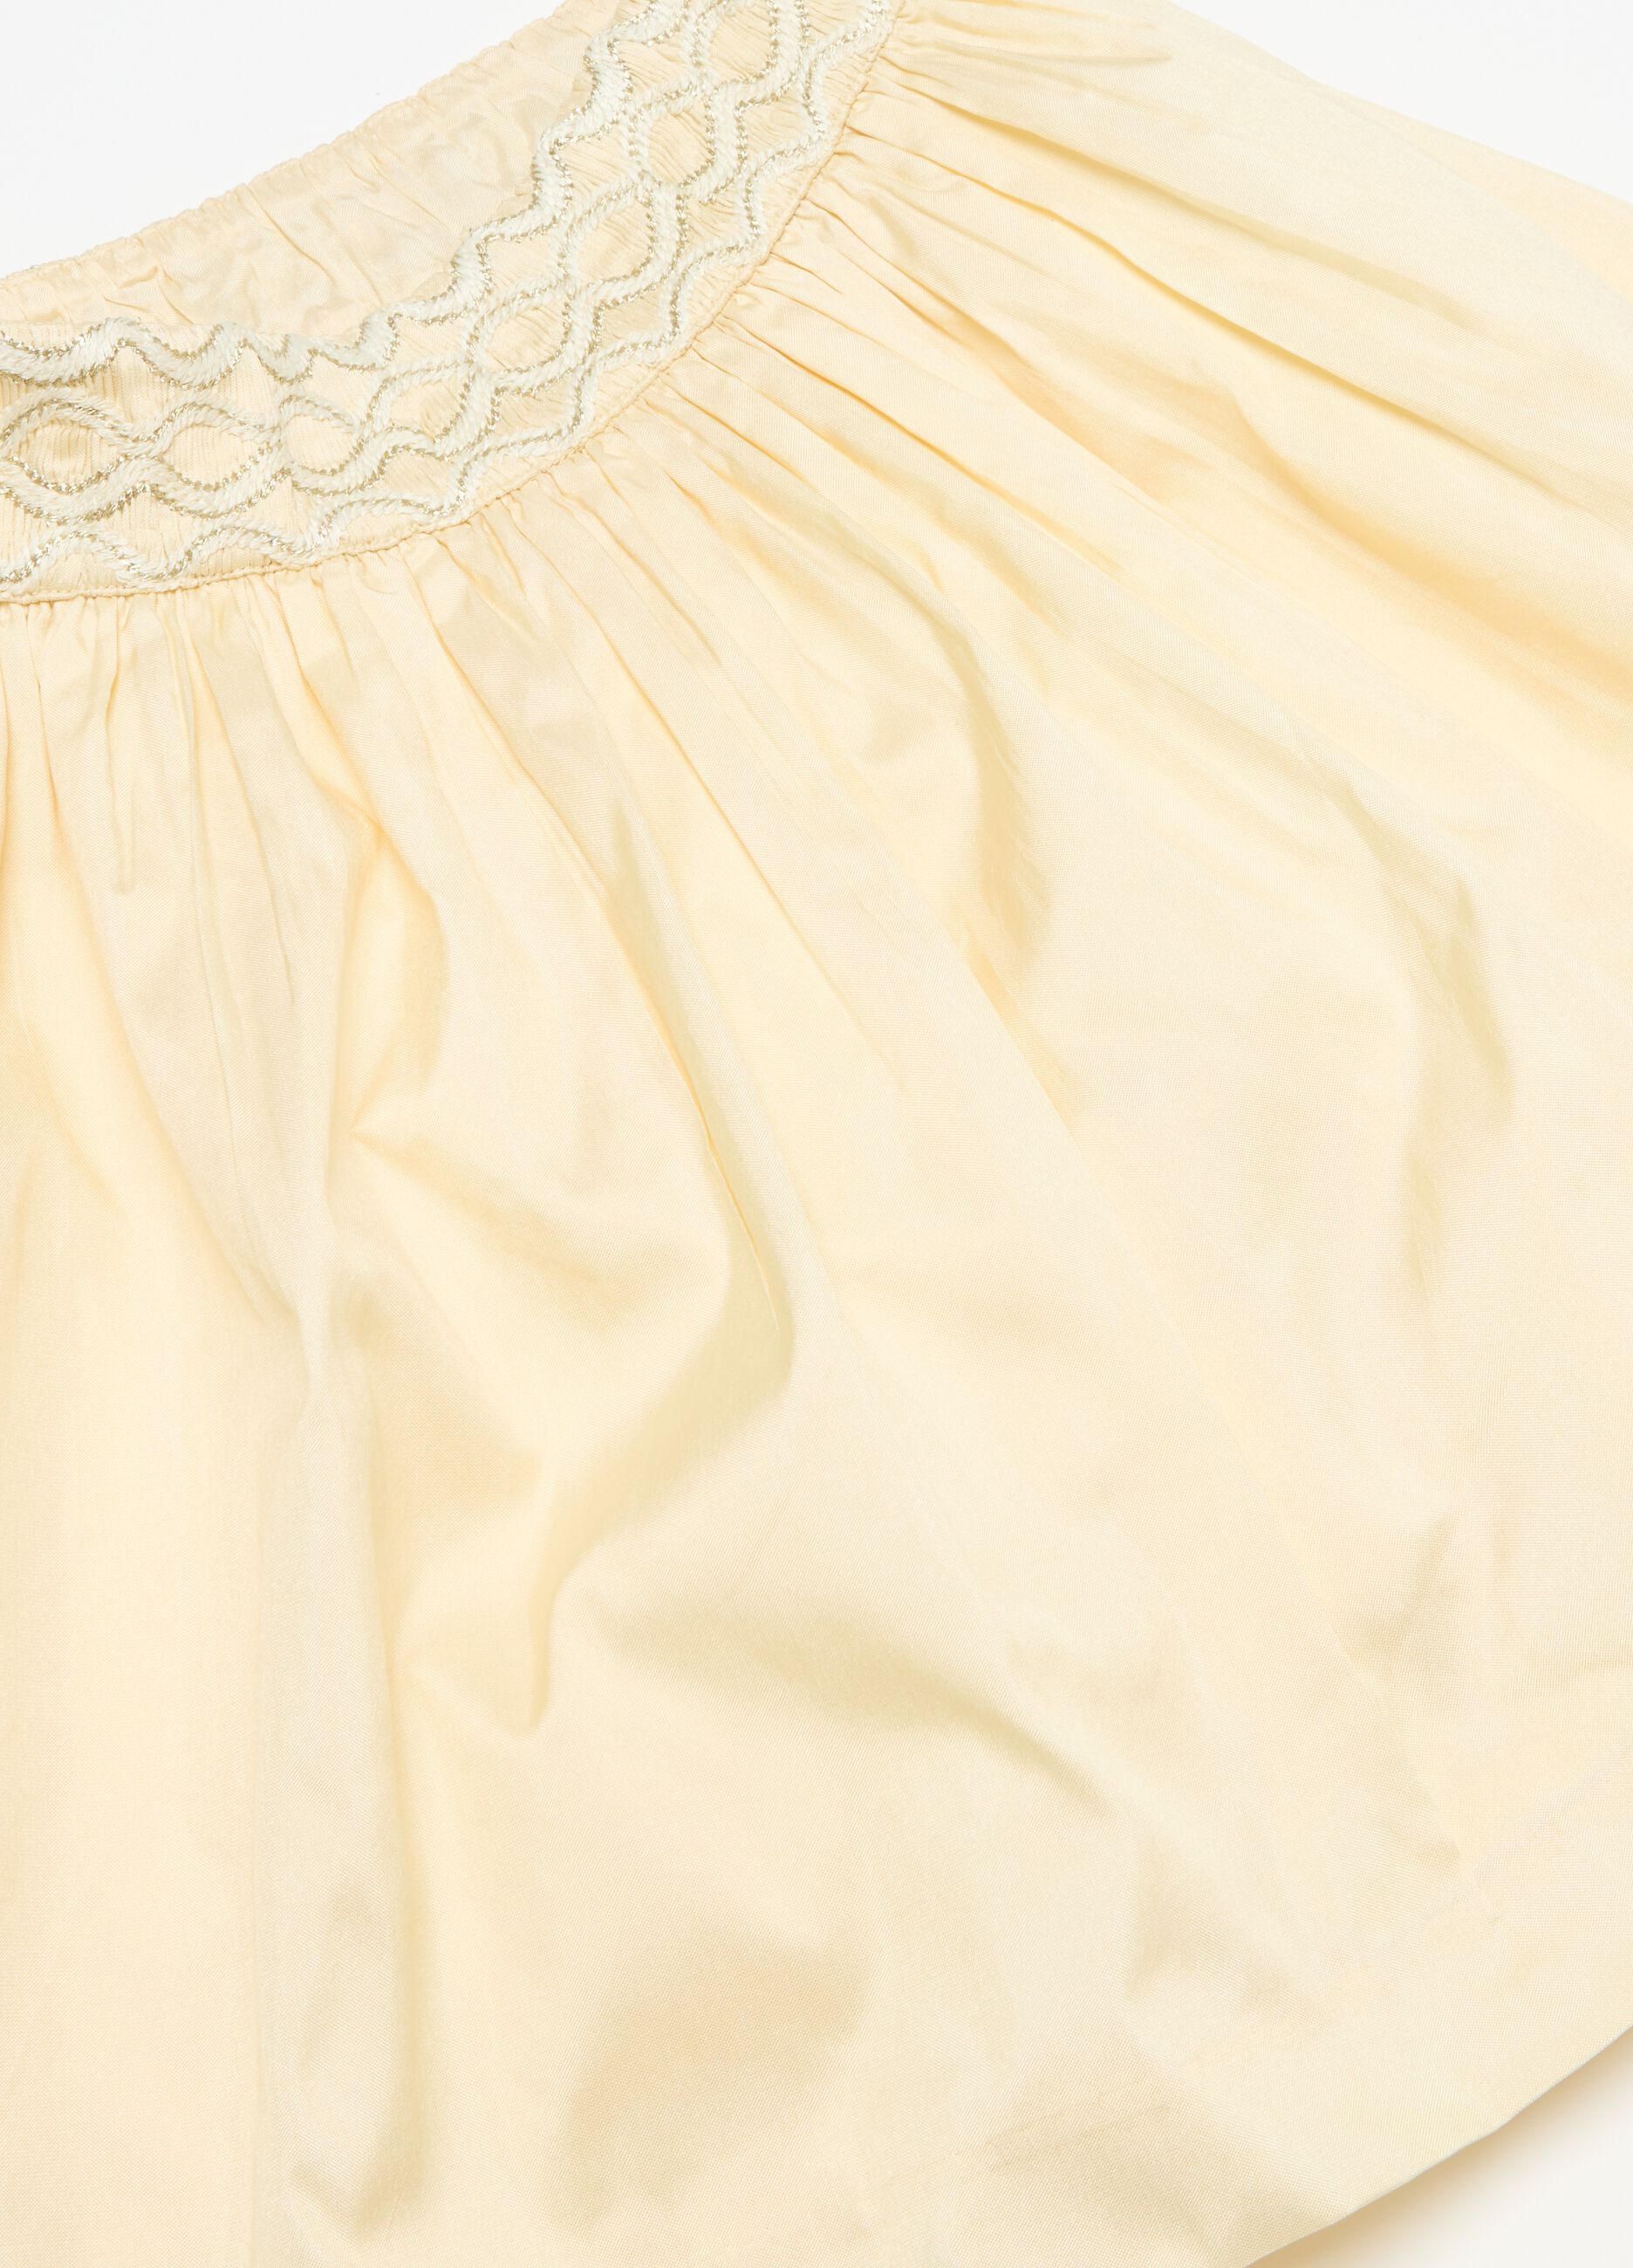 Taffeta skirt with lurex embroidery